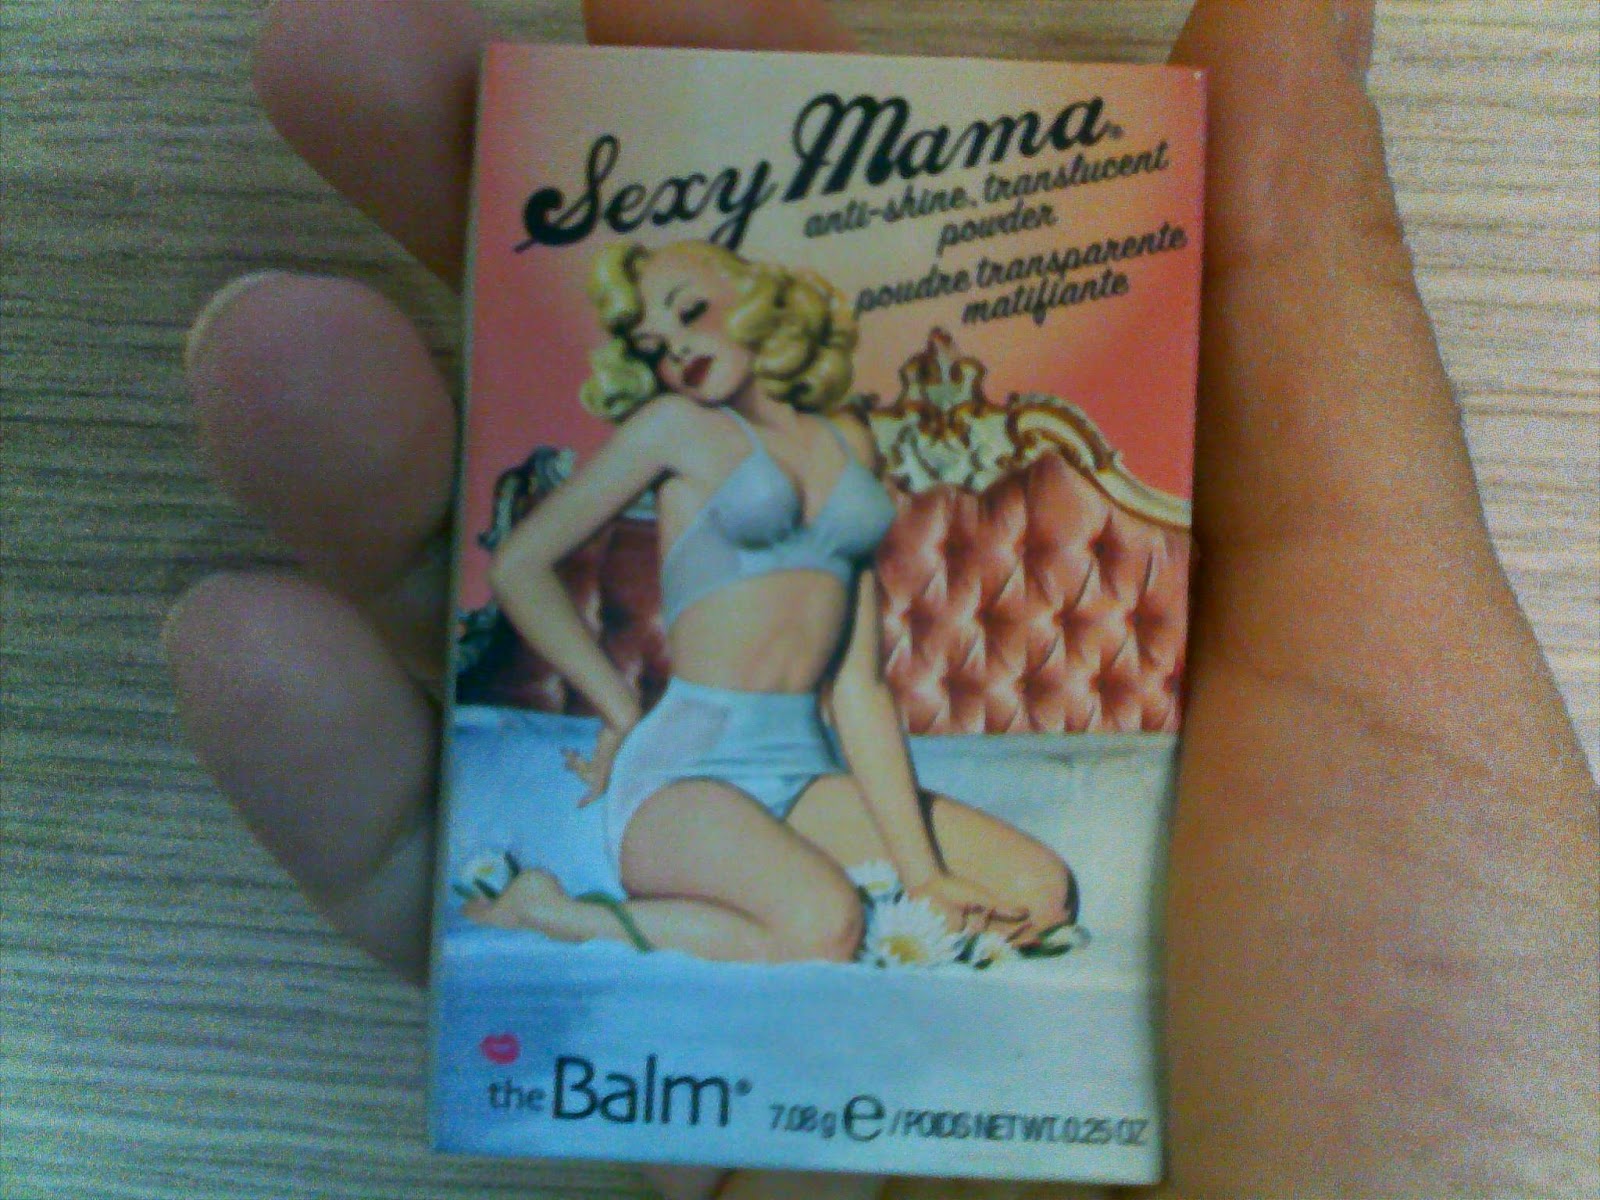 TheBalm Sexy Mama powder, the cover